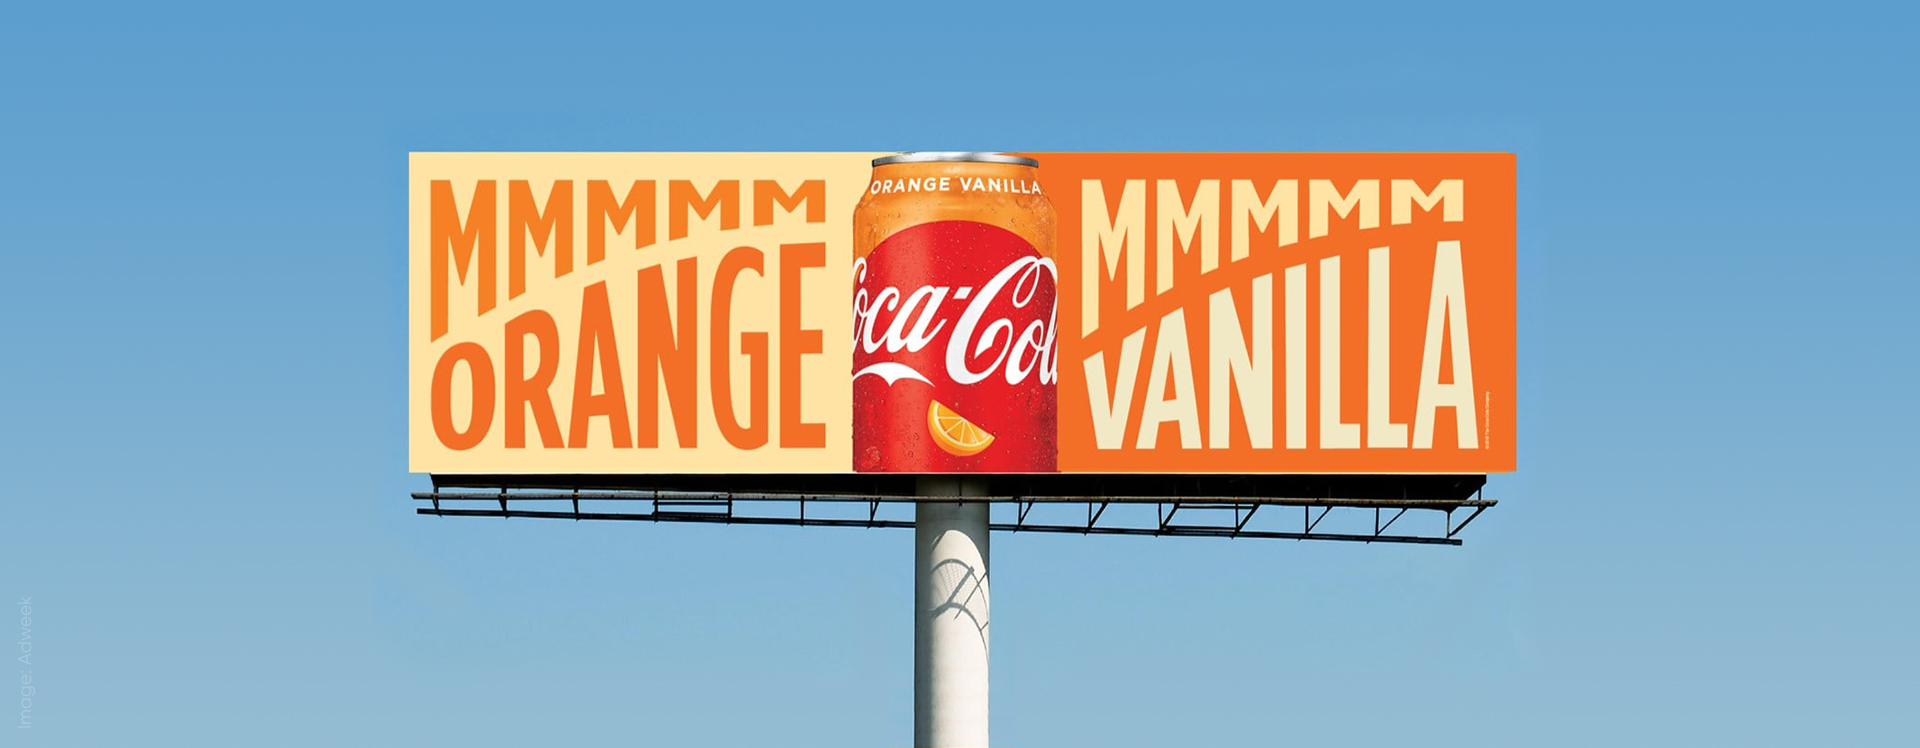 Billboard displaying orange Vanilla Coke advertisement header.